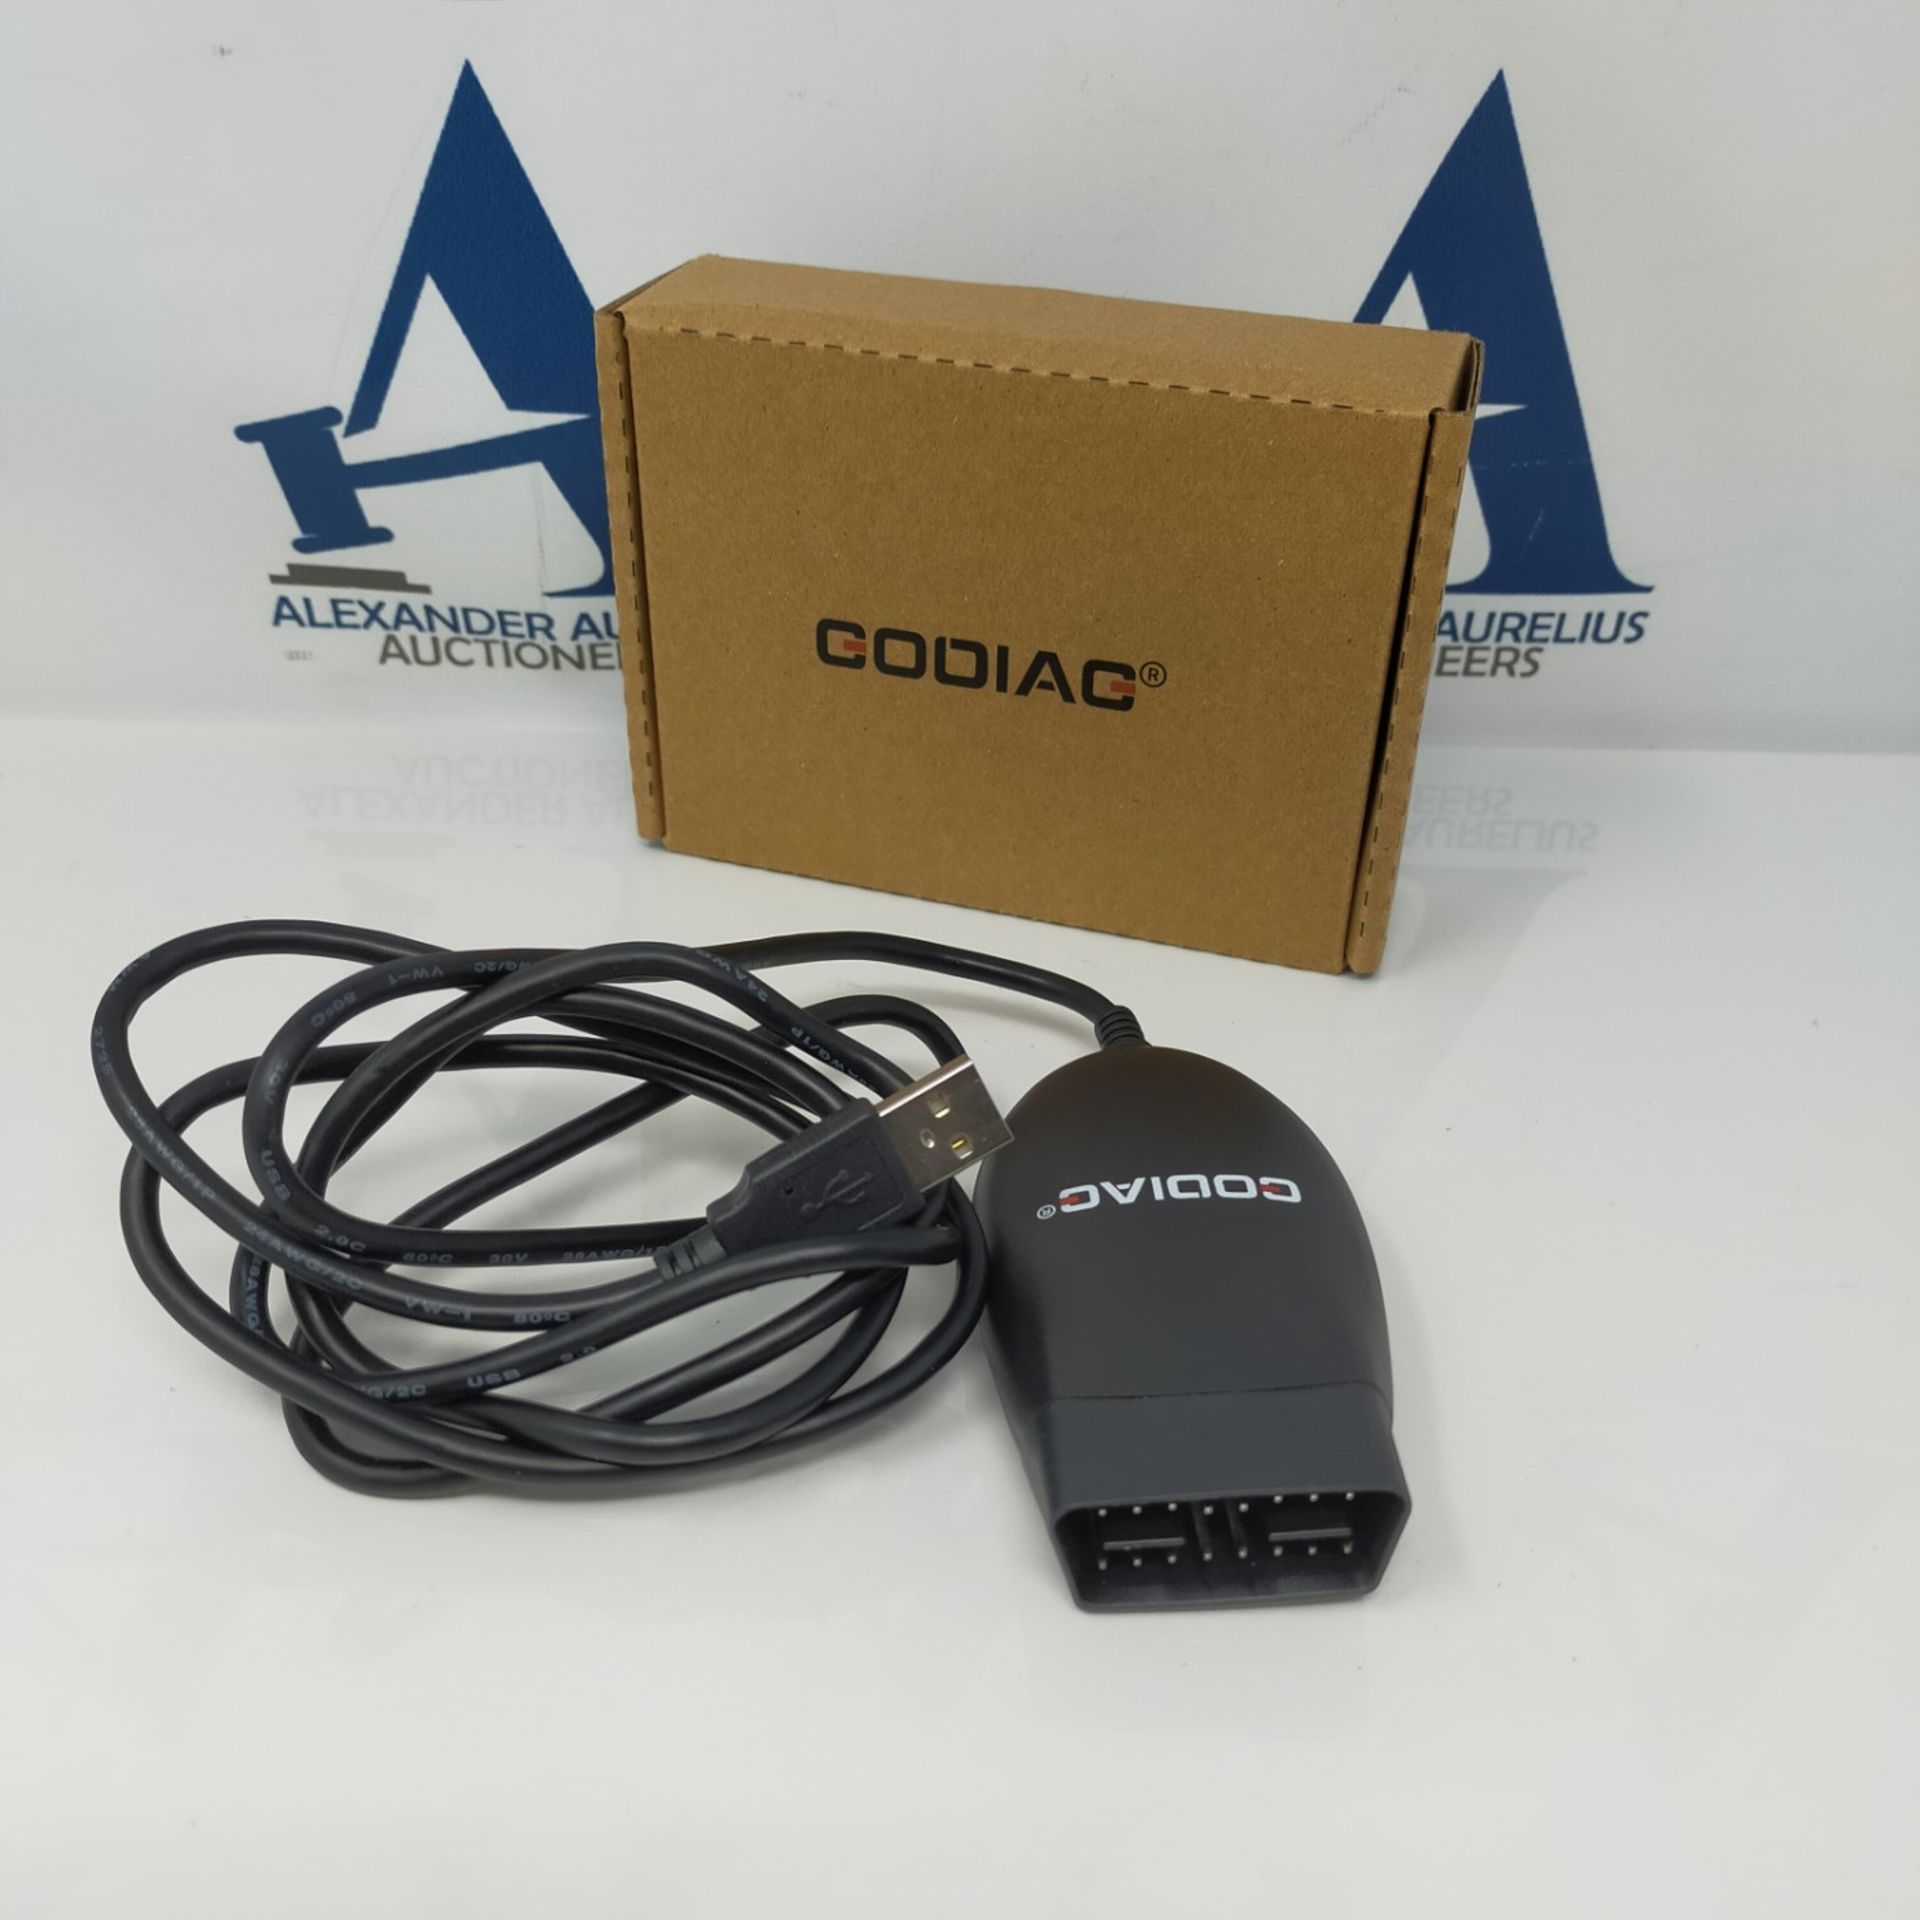 J2534 Openport 2.0 Cable, GODIAG OBD2 USB Adapter ECU Diagnostic Tool, Flash Chip Tunn - Image 2 of 8